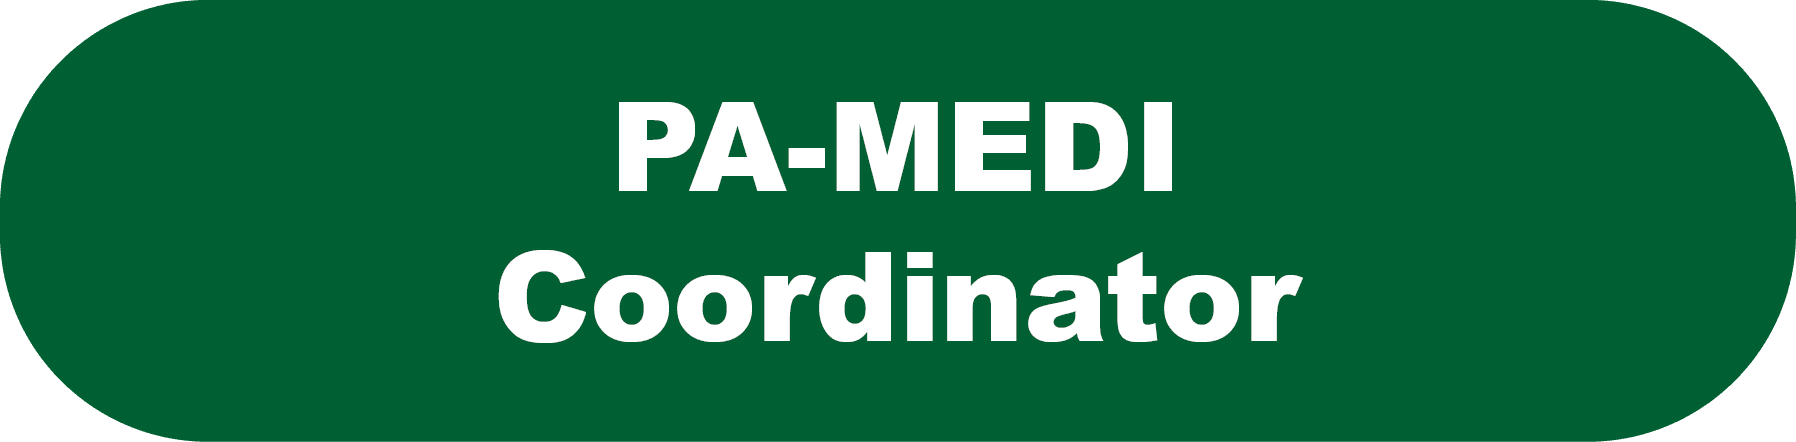 PA-MEDI Coordinator 